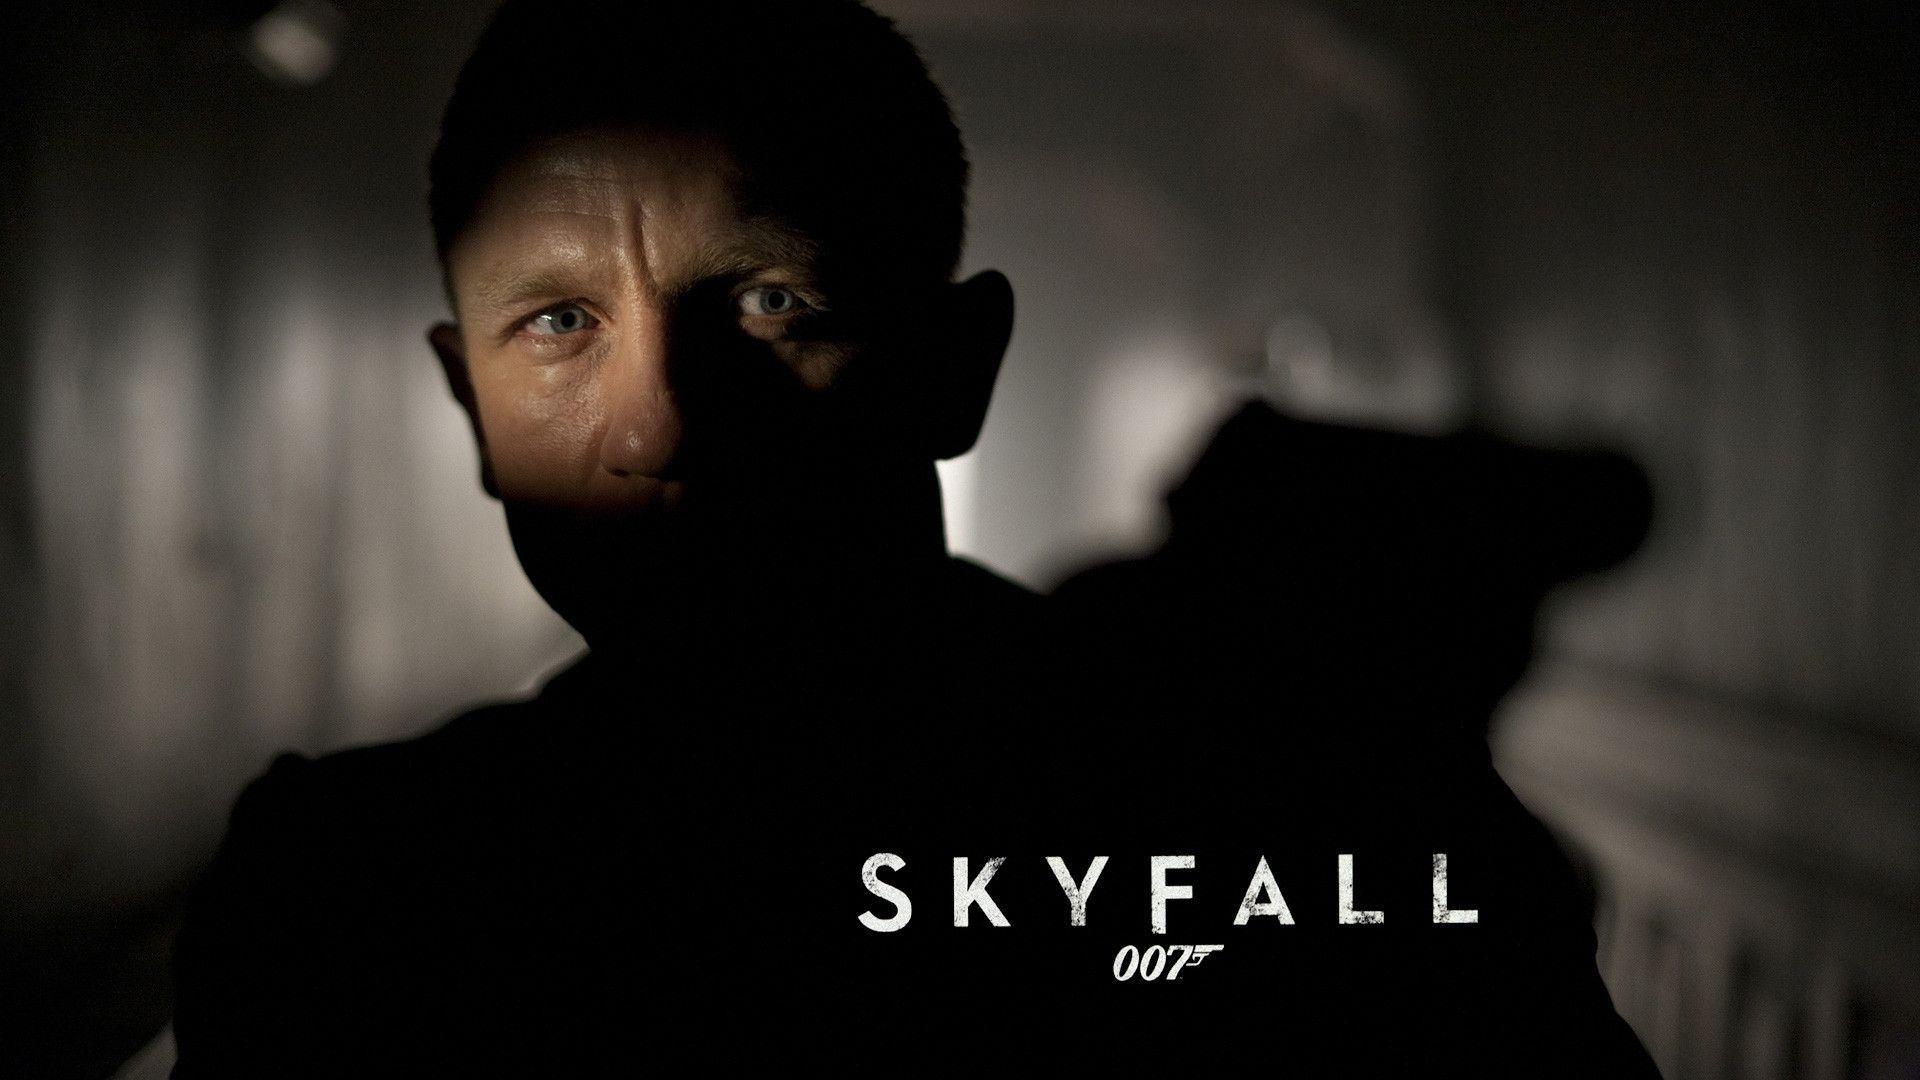 Skyfall 007 Wallpaper. PicsWallpaper